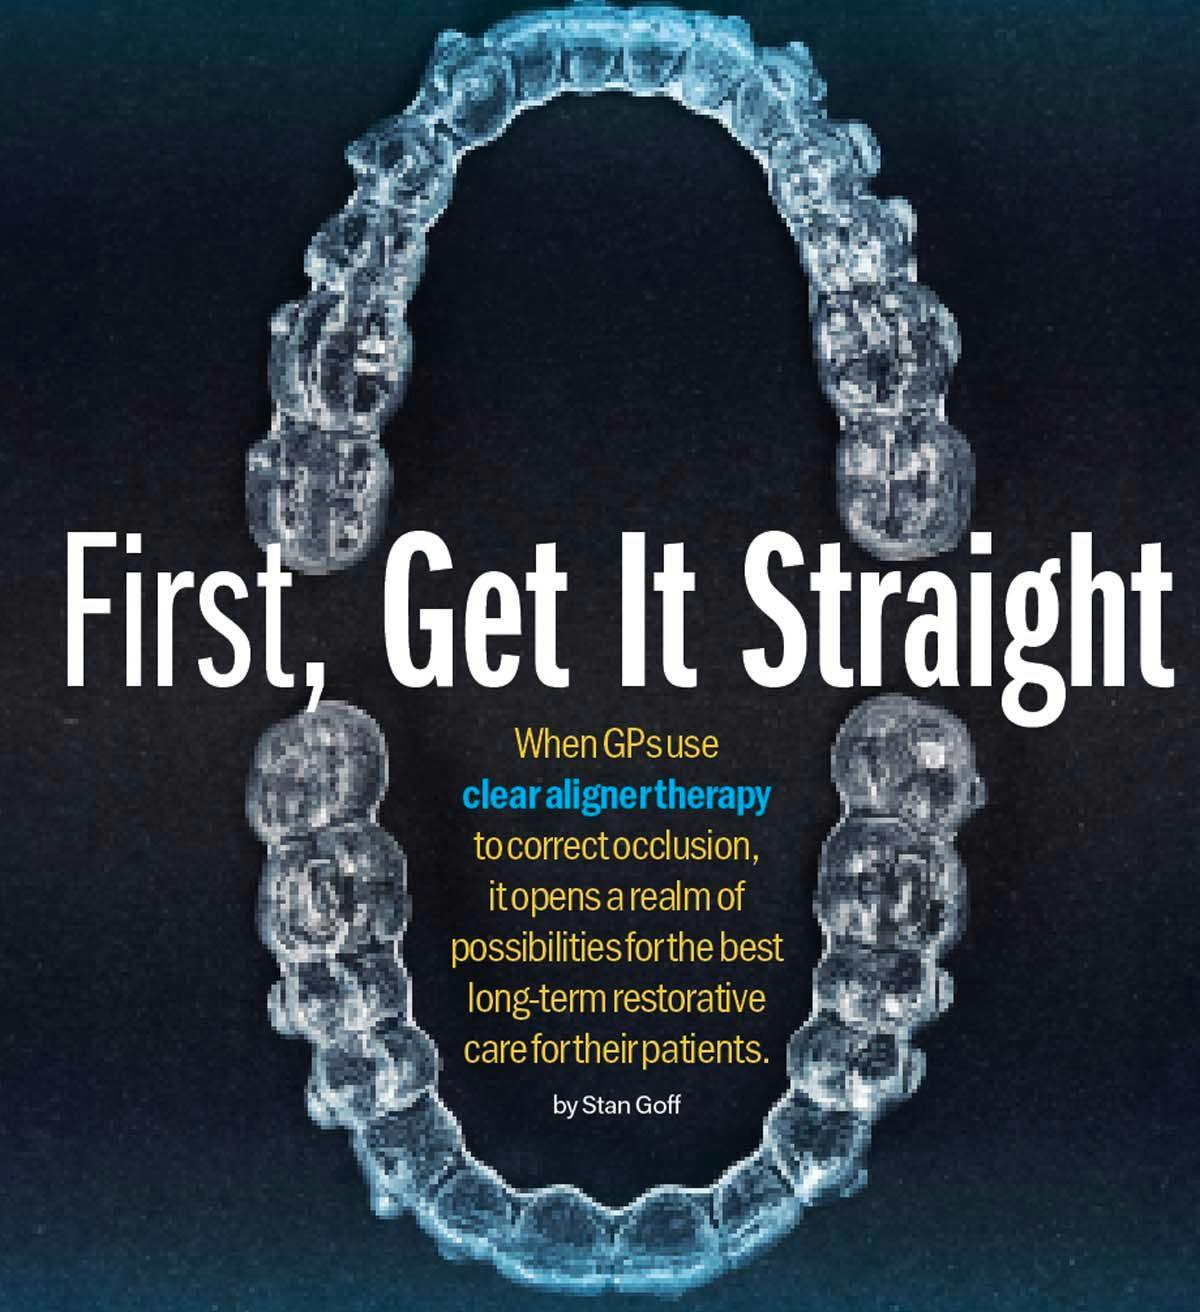 First, Get It Straight | Image Credit: L_Martinez - stock.adobe.com